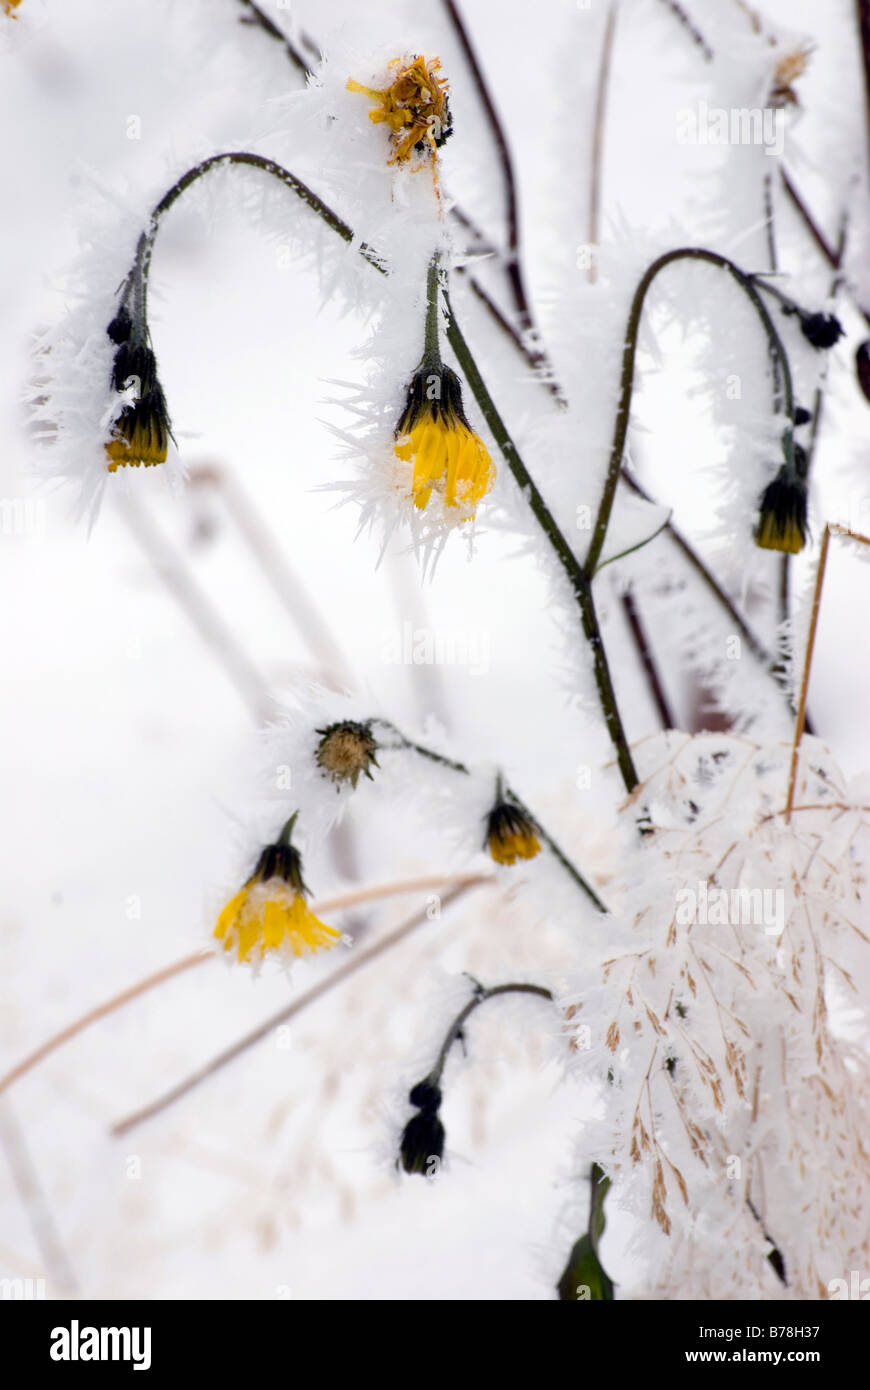 Switzerland, Allgaeu, Onset of winter, frozen flowers Stock Photo